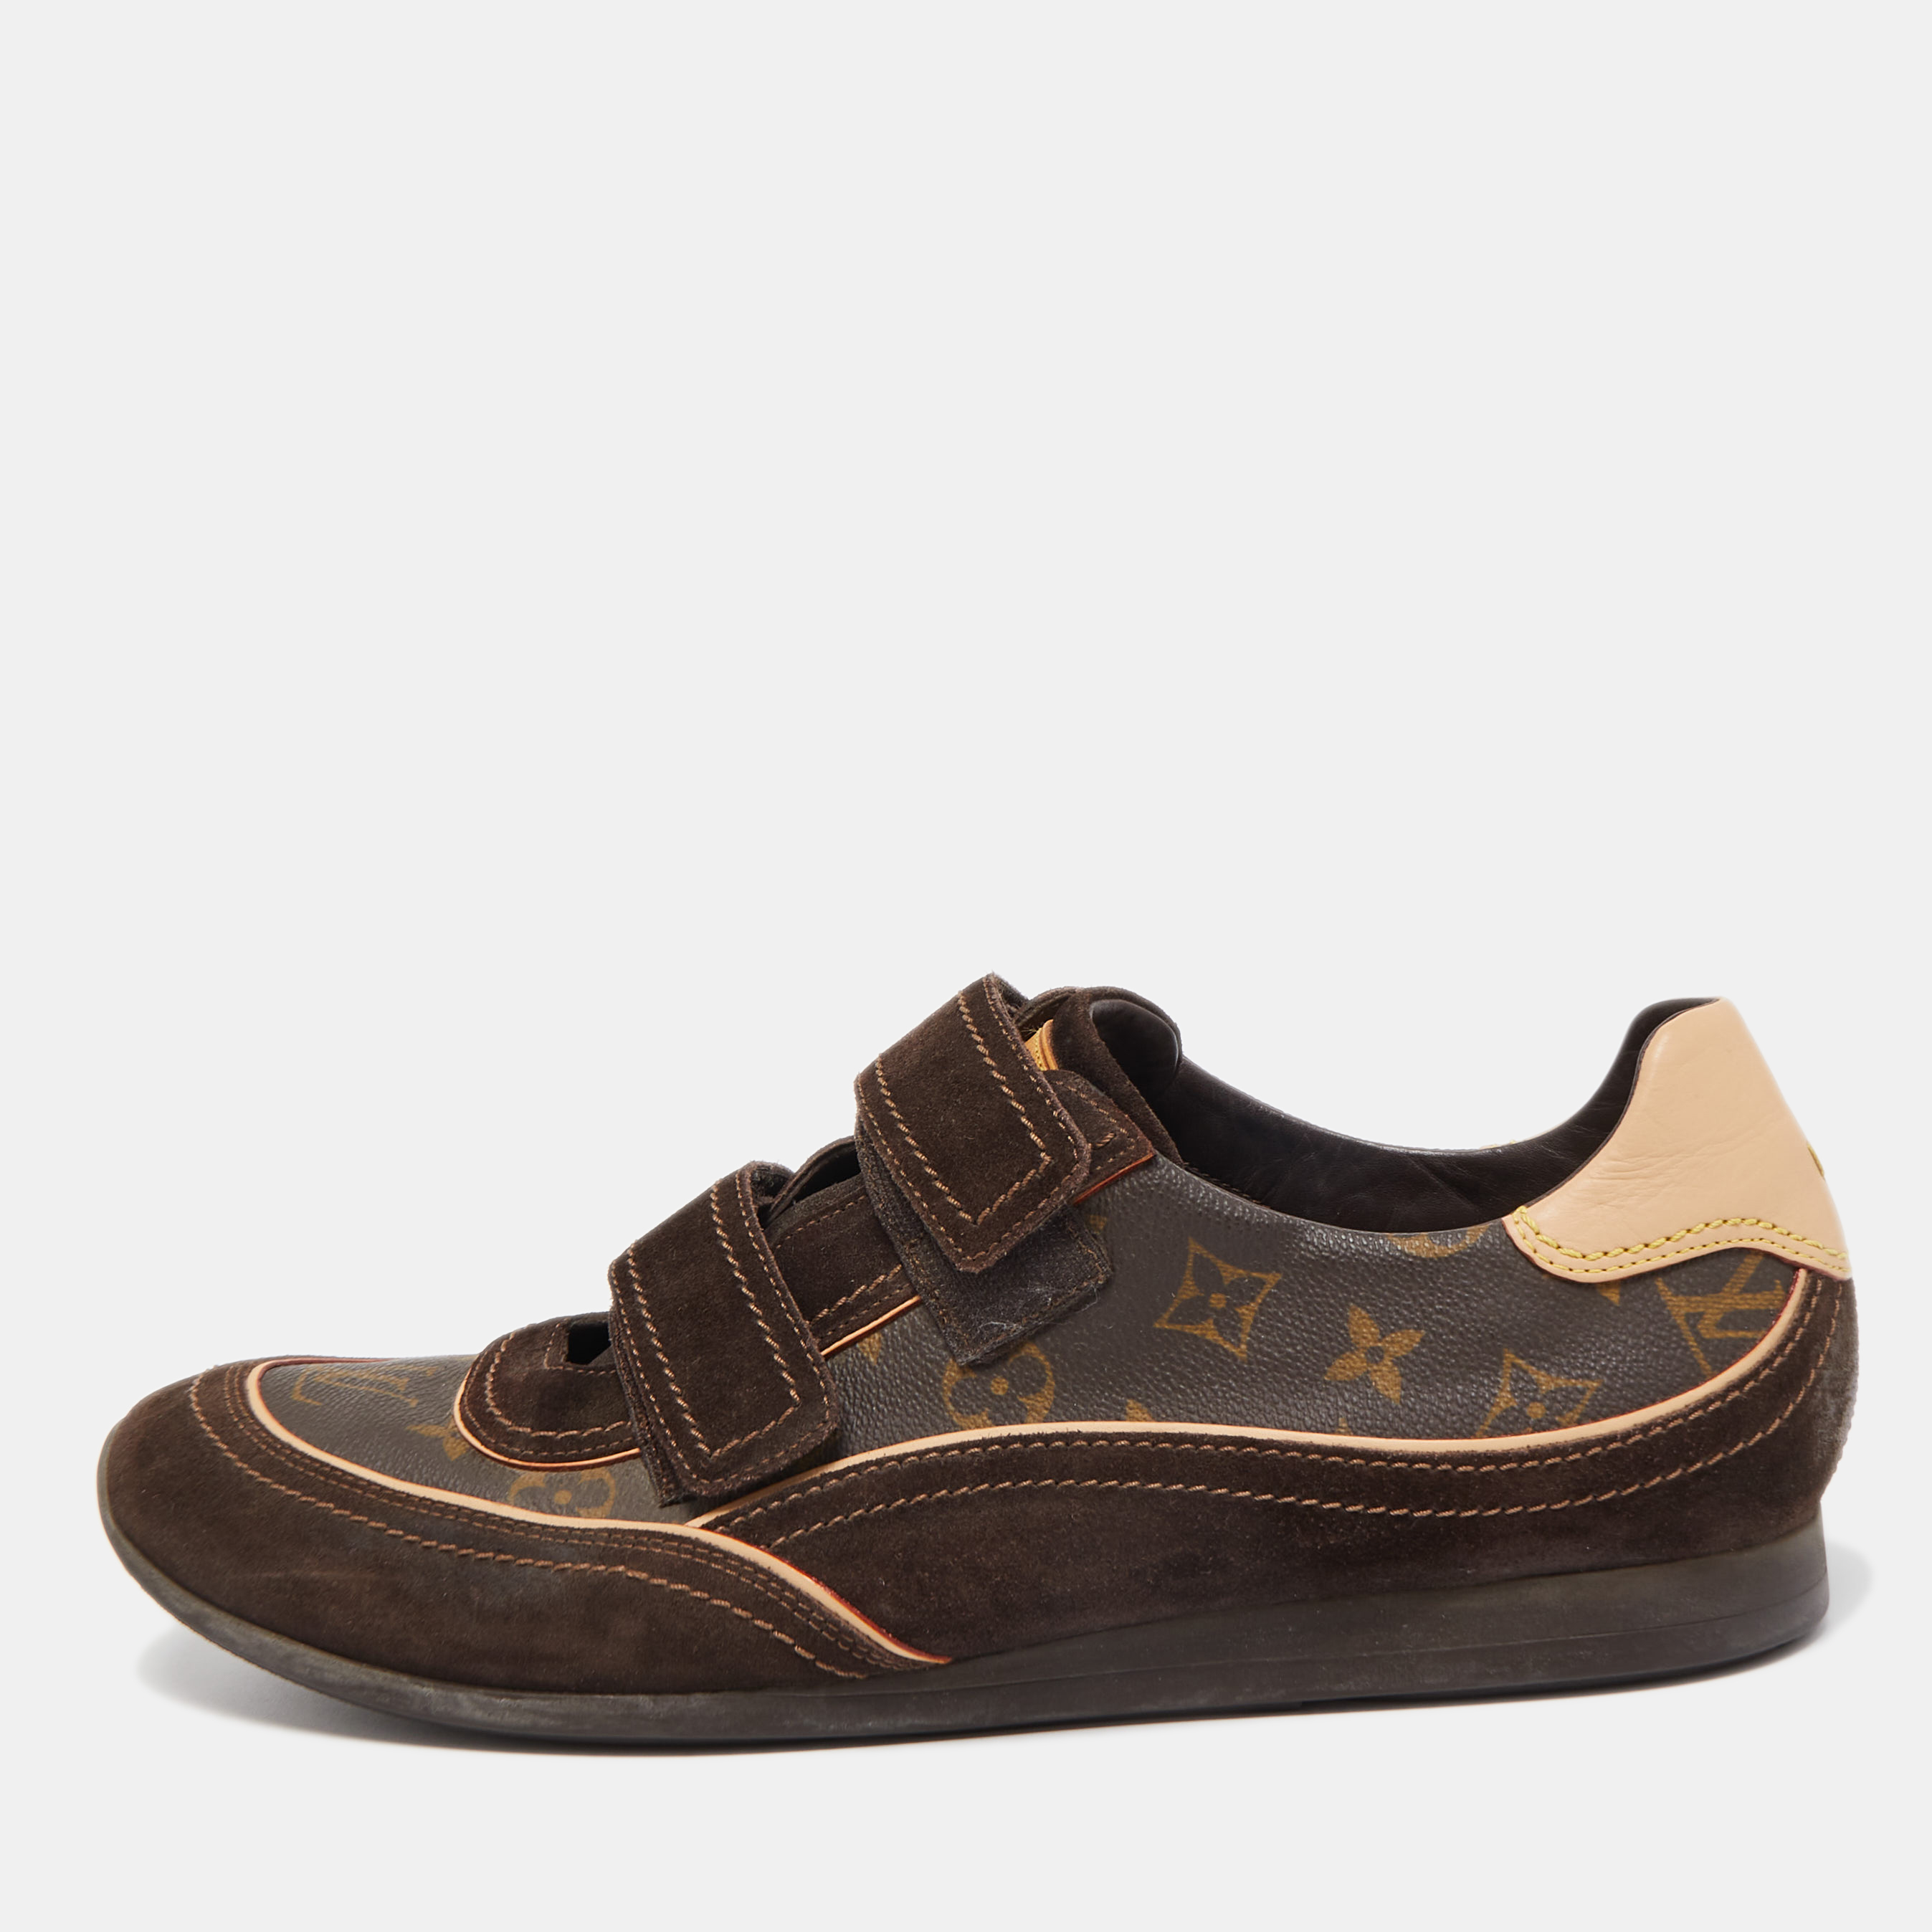 Buy Cheap Louis Vuitton Shoes for Men's Louis Vuitton Sneakers #9999926933  from